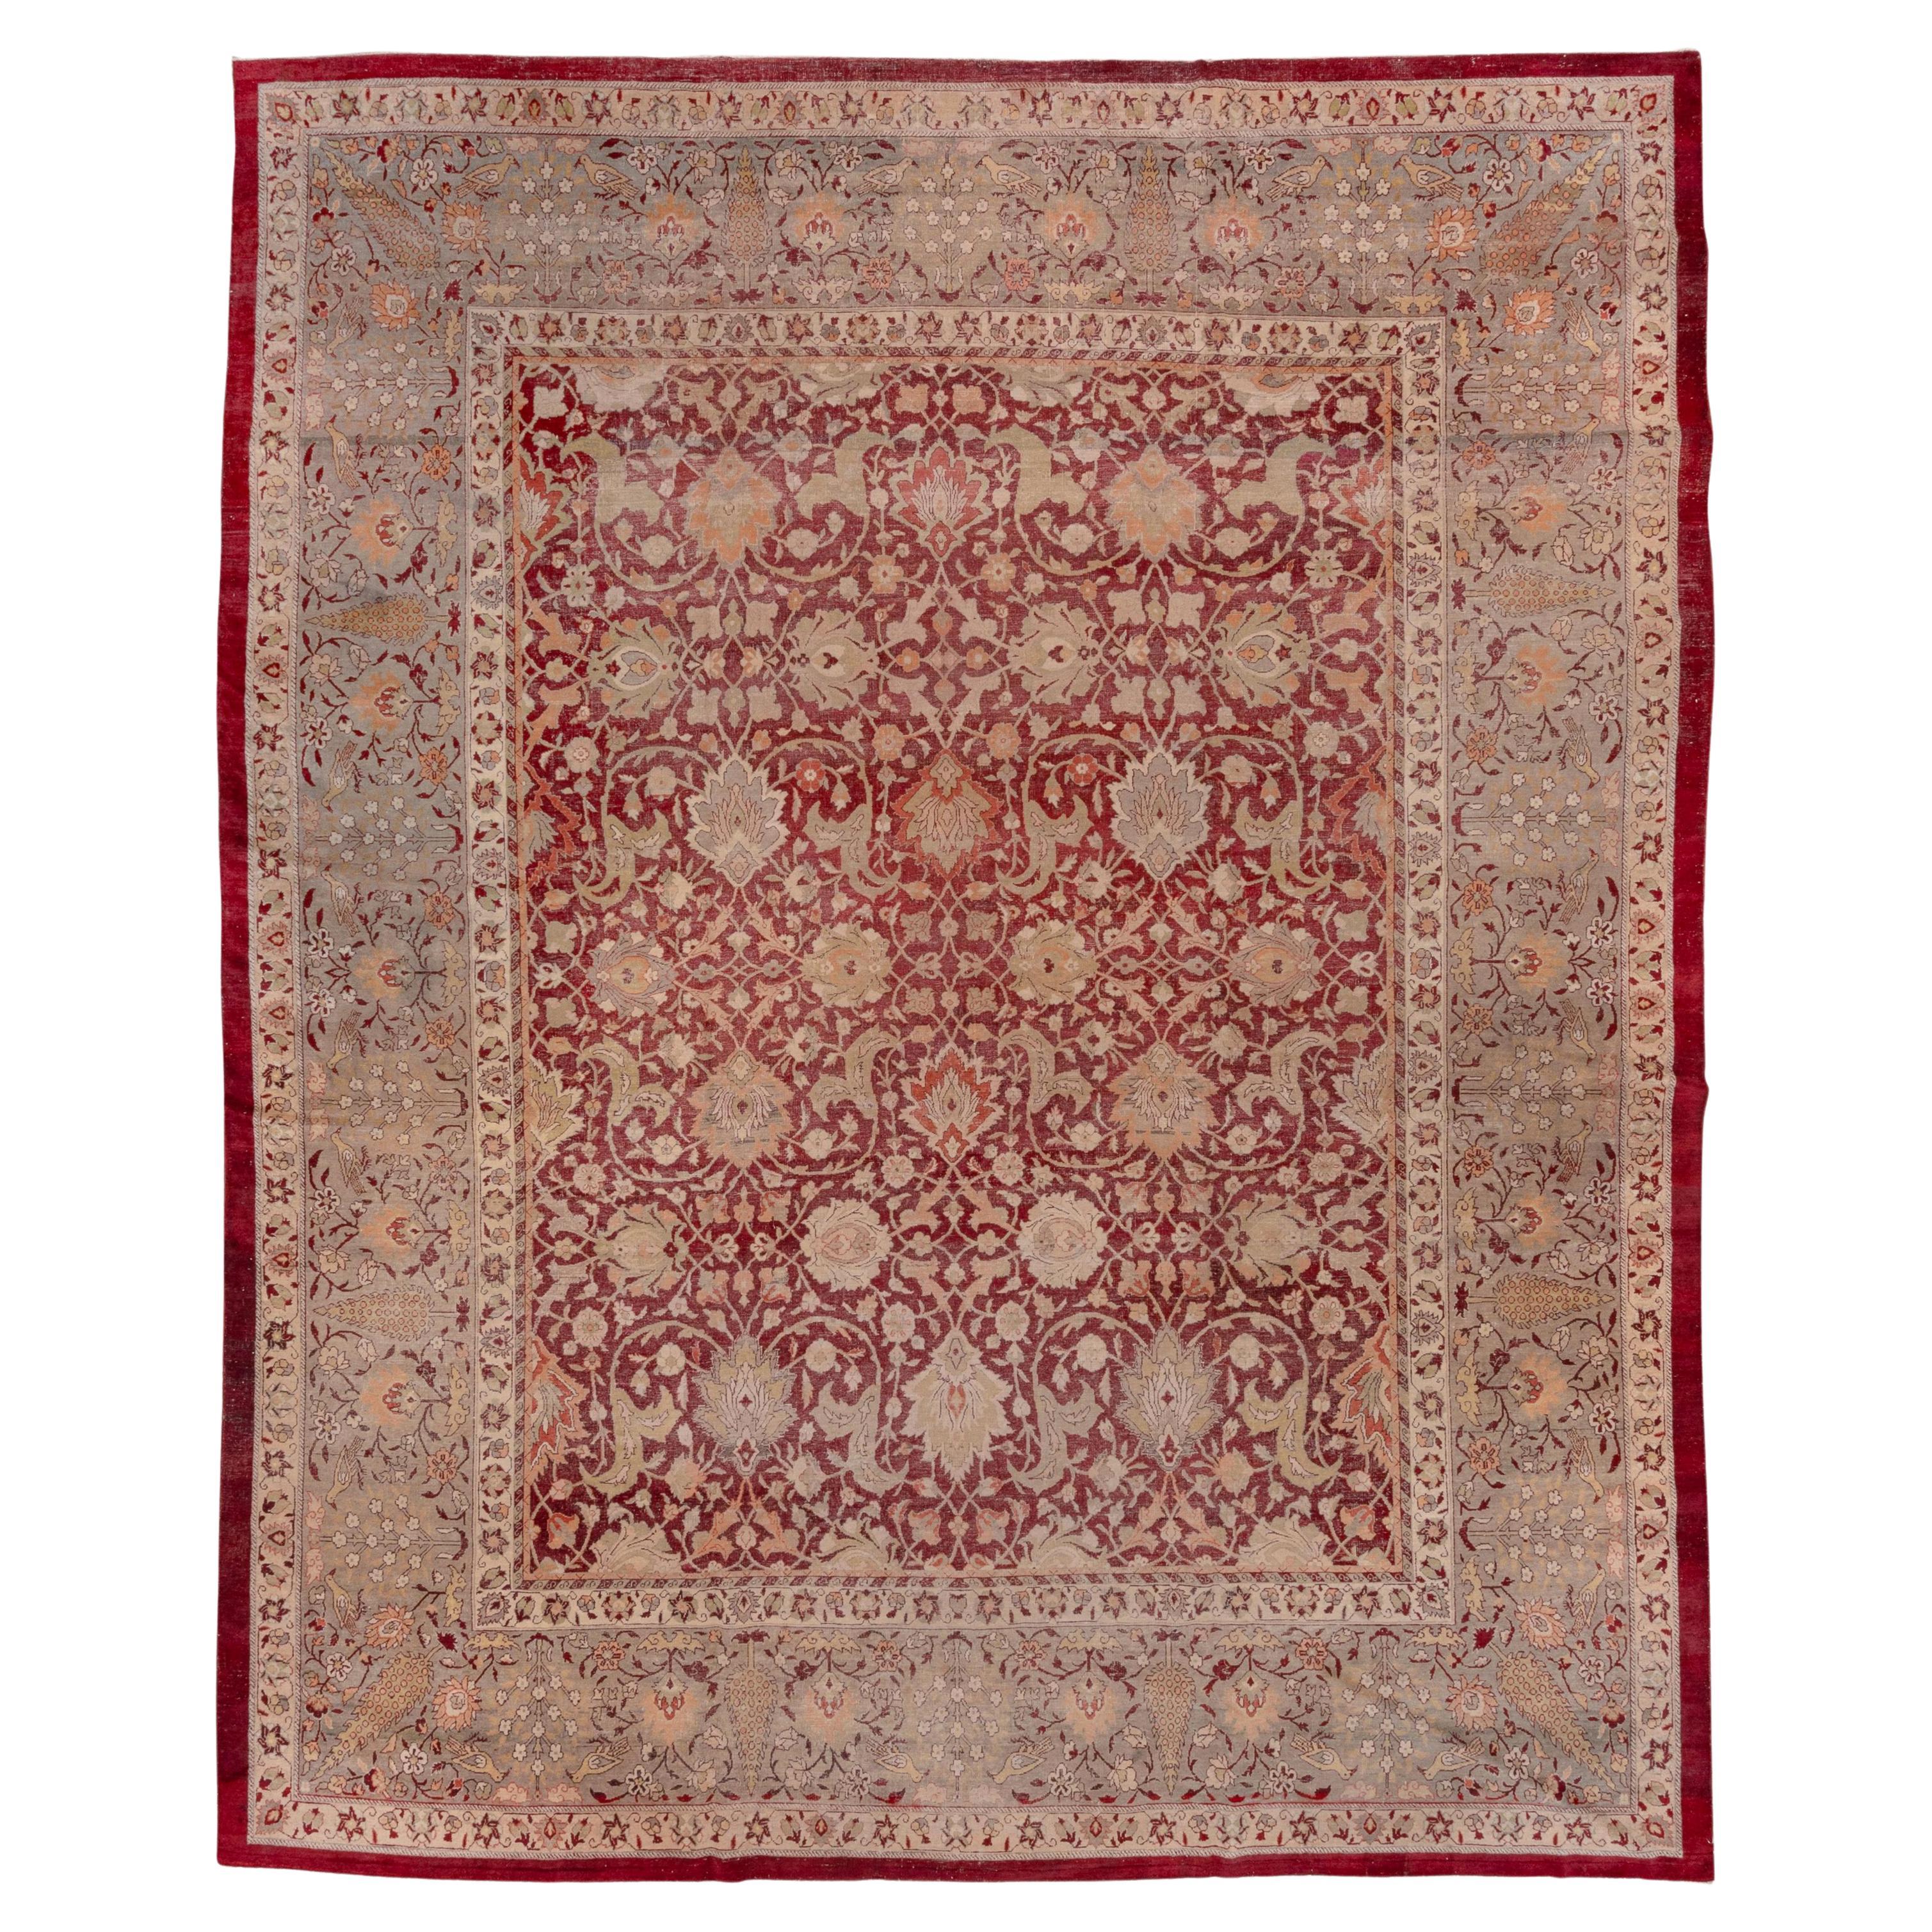 Antique Indian Amritzar Carpet, Burgundy Allover Field, Gray Borders For Sale